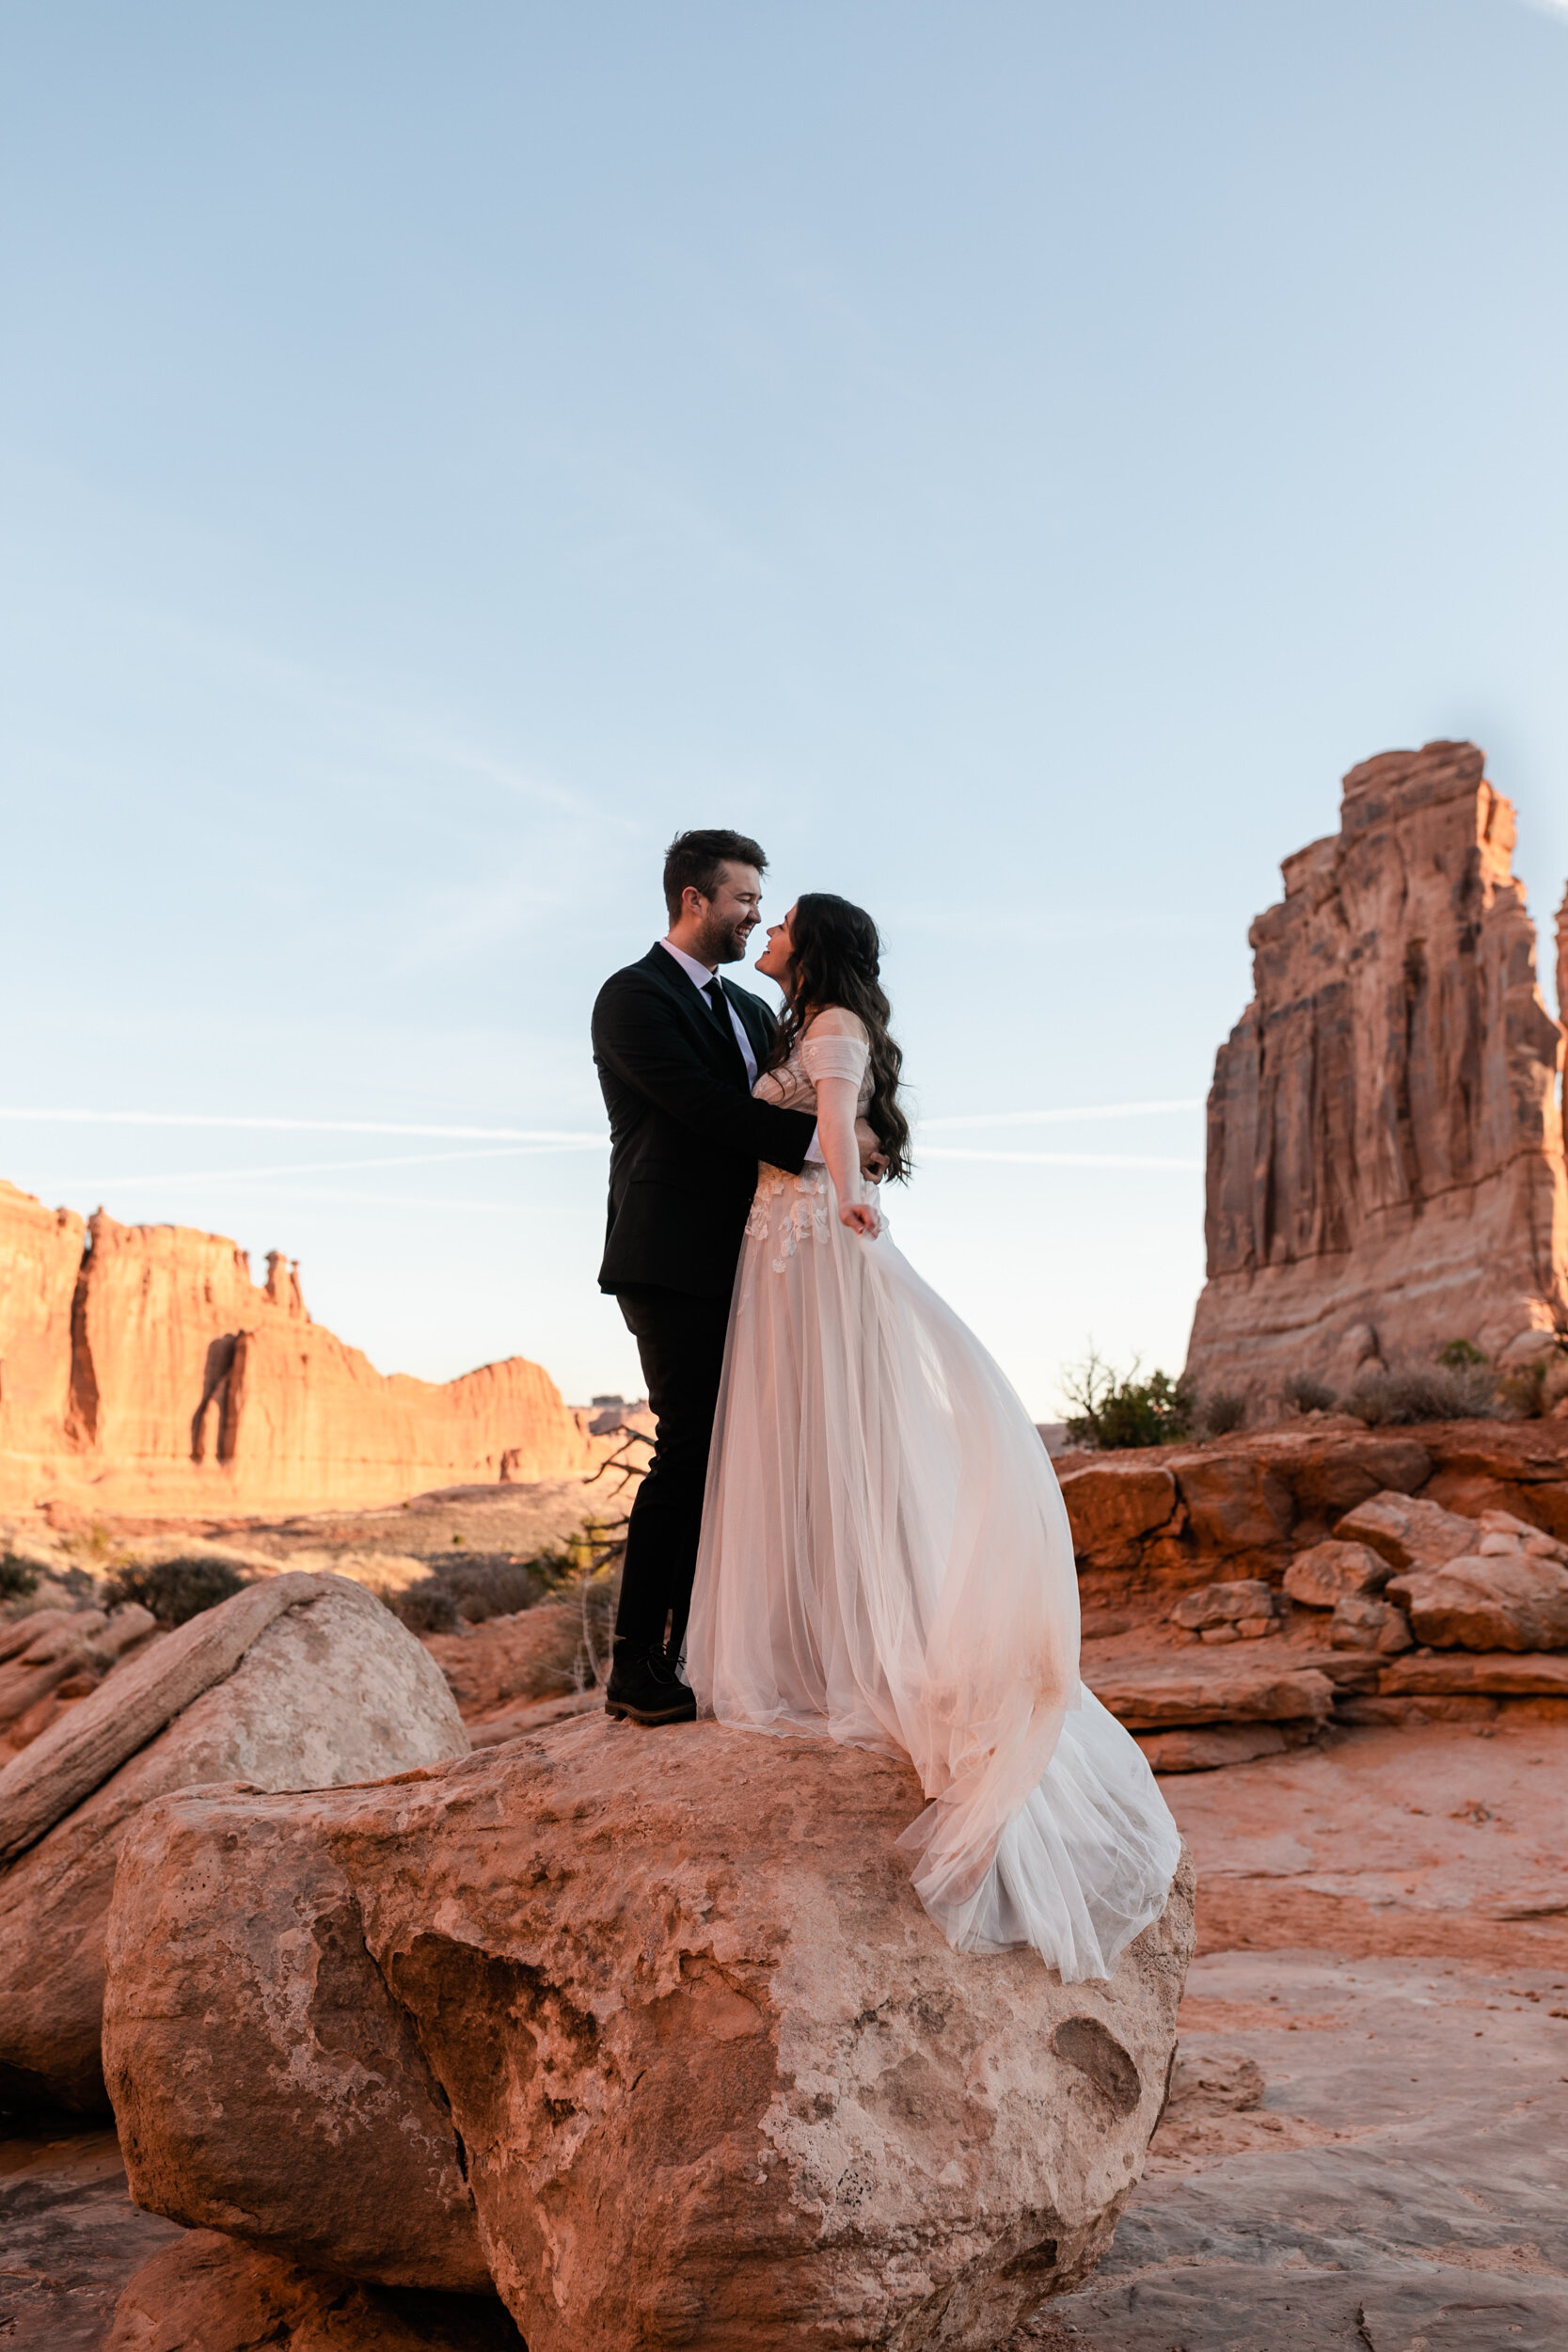 Moab Utah Elopement | Adventurous Small Wedding in Desert at Sunrise | The Hearnes Photography